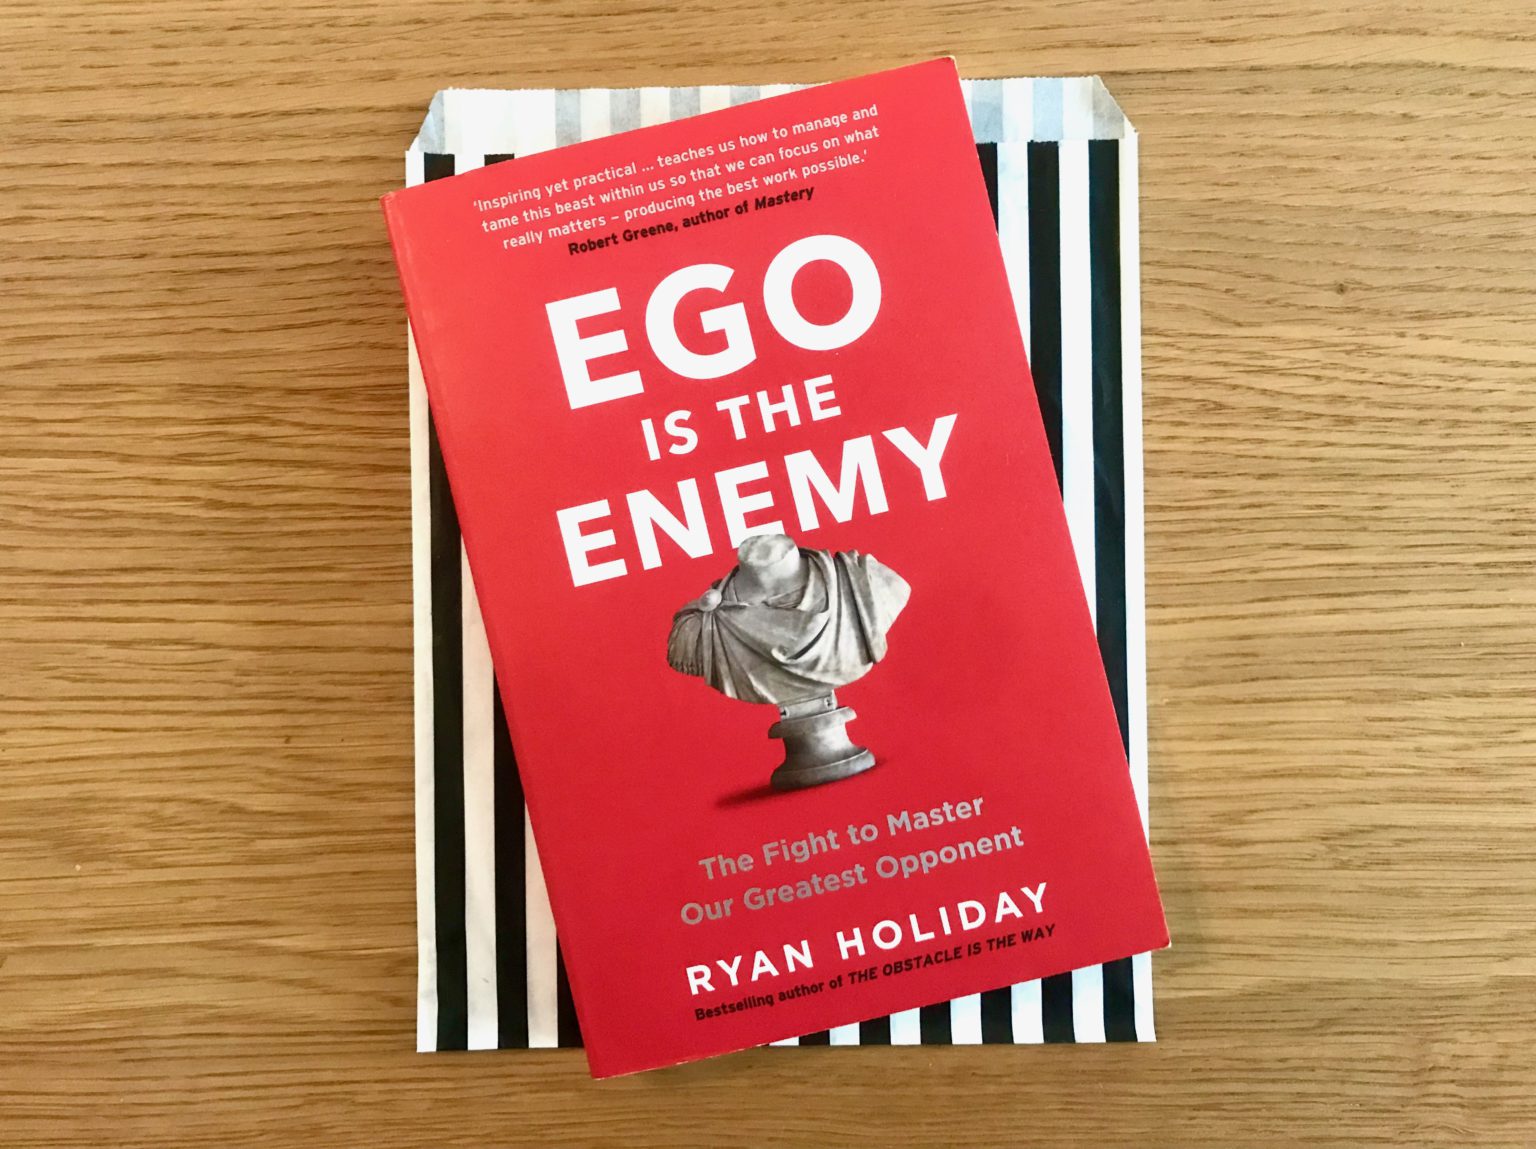 Ryan Holiday Dein Ego ist dein Feind (Ego is the Enemy)